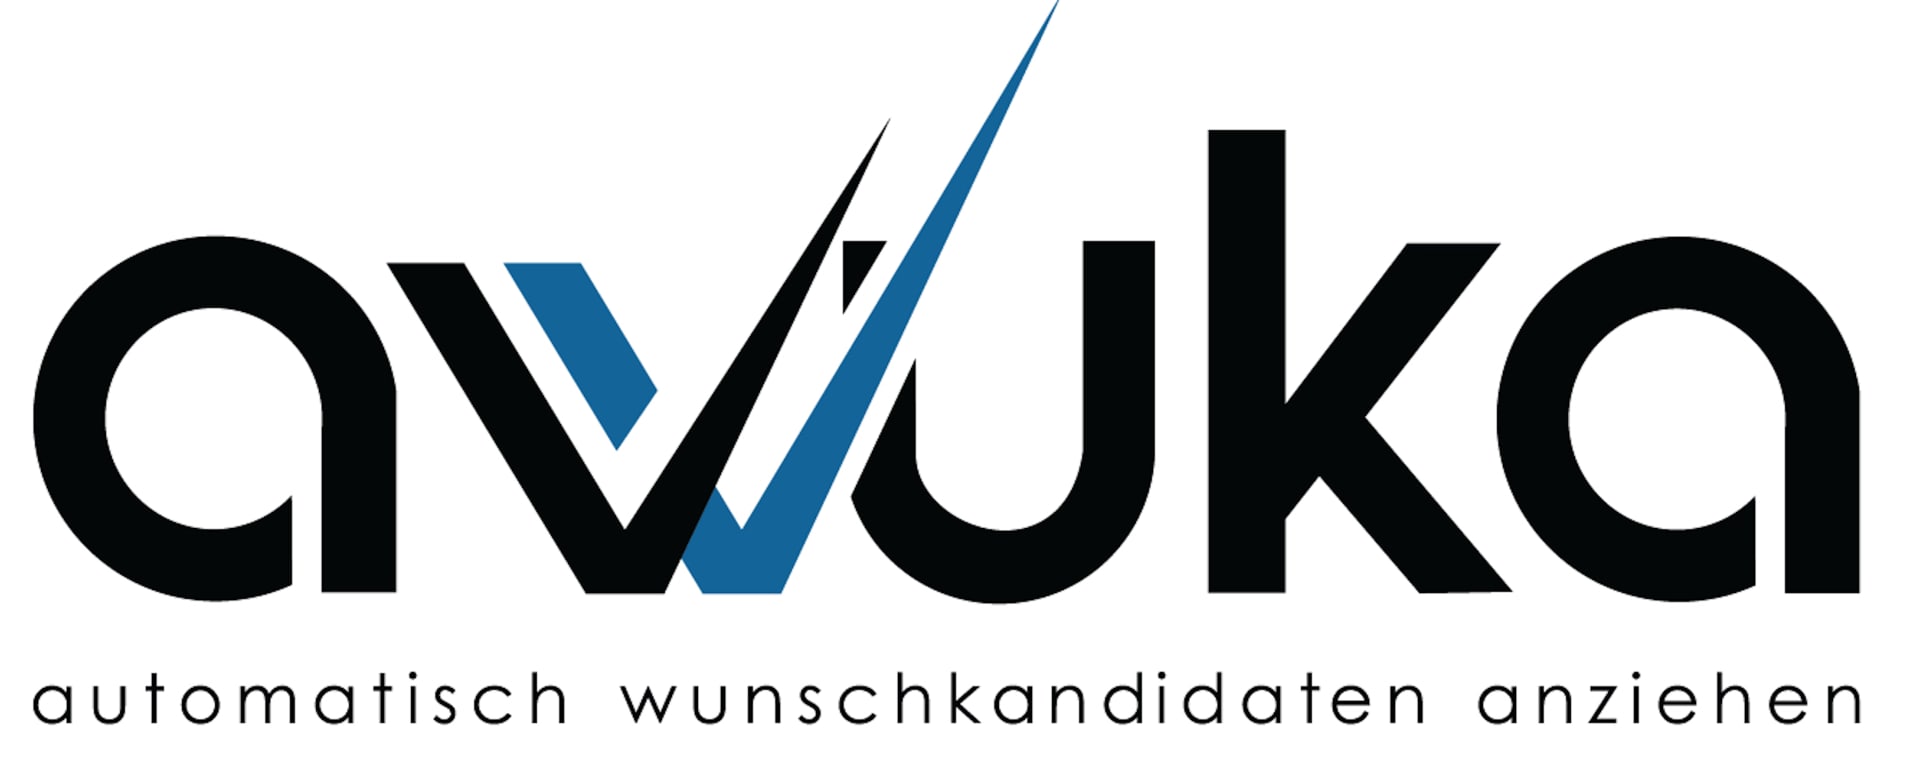 awuka GmbH logo